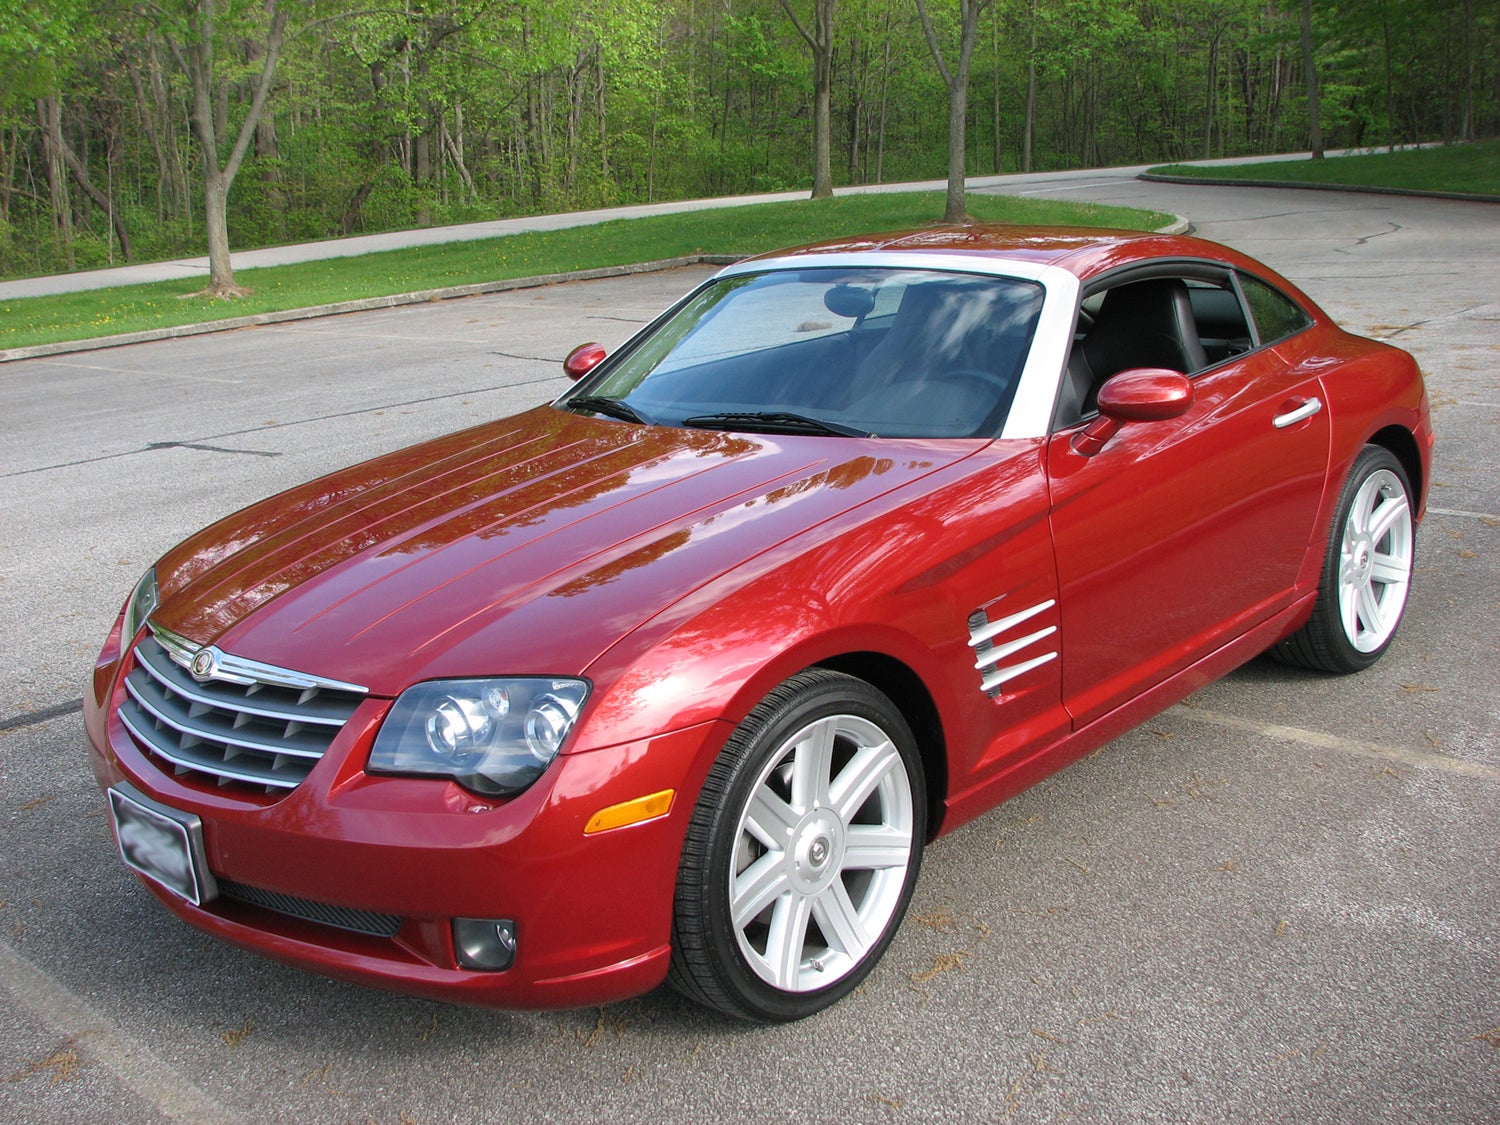 2004 Chrysler crossfire review edmunds